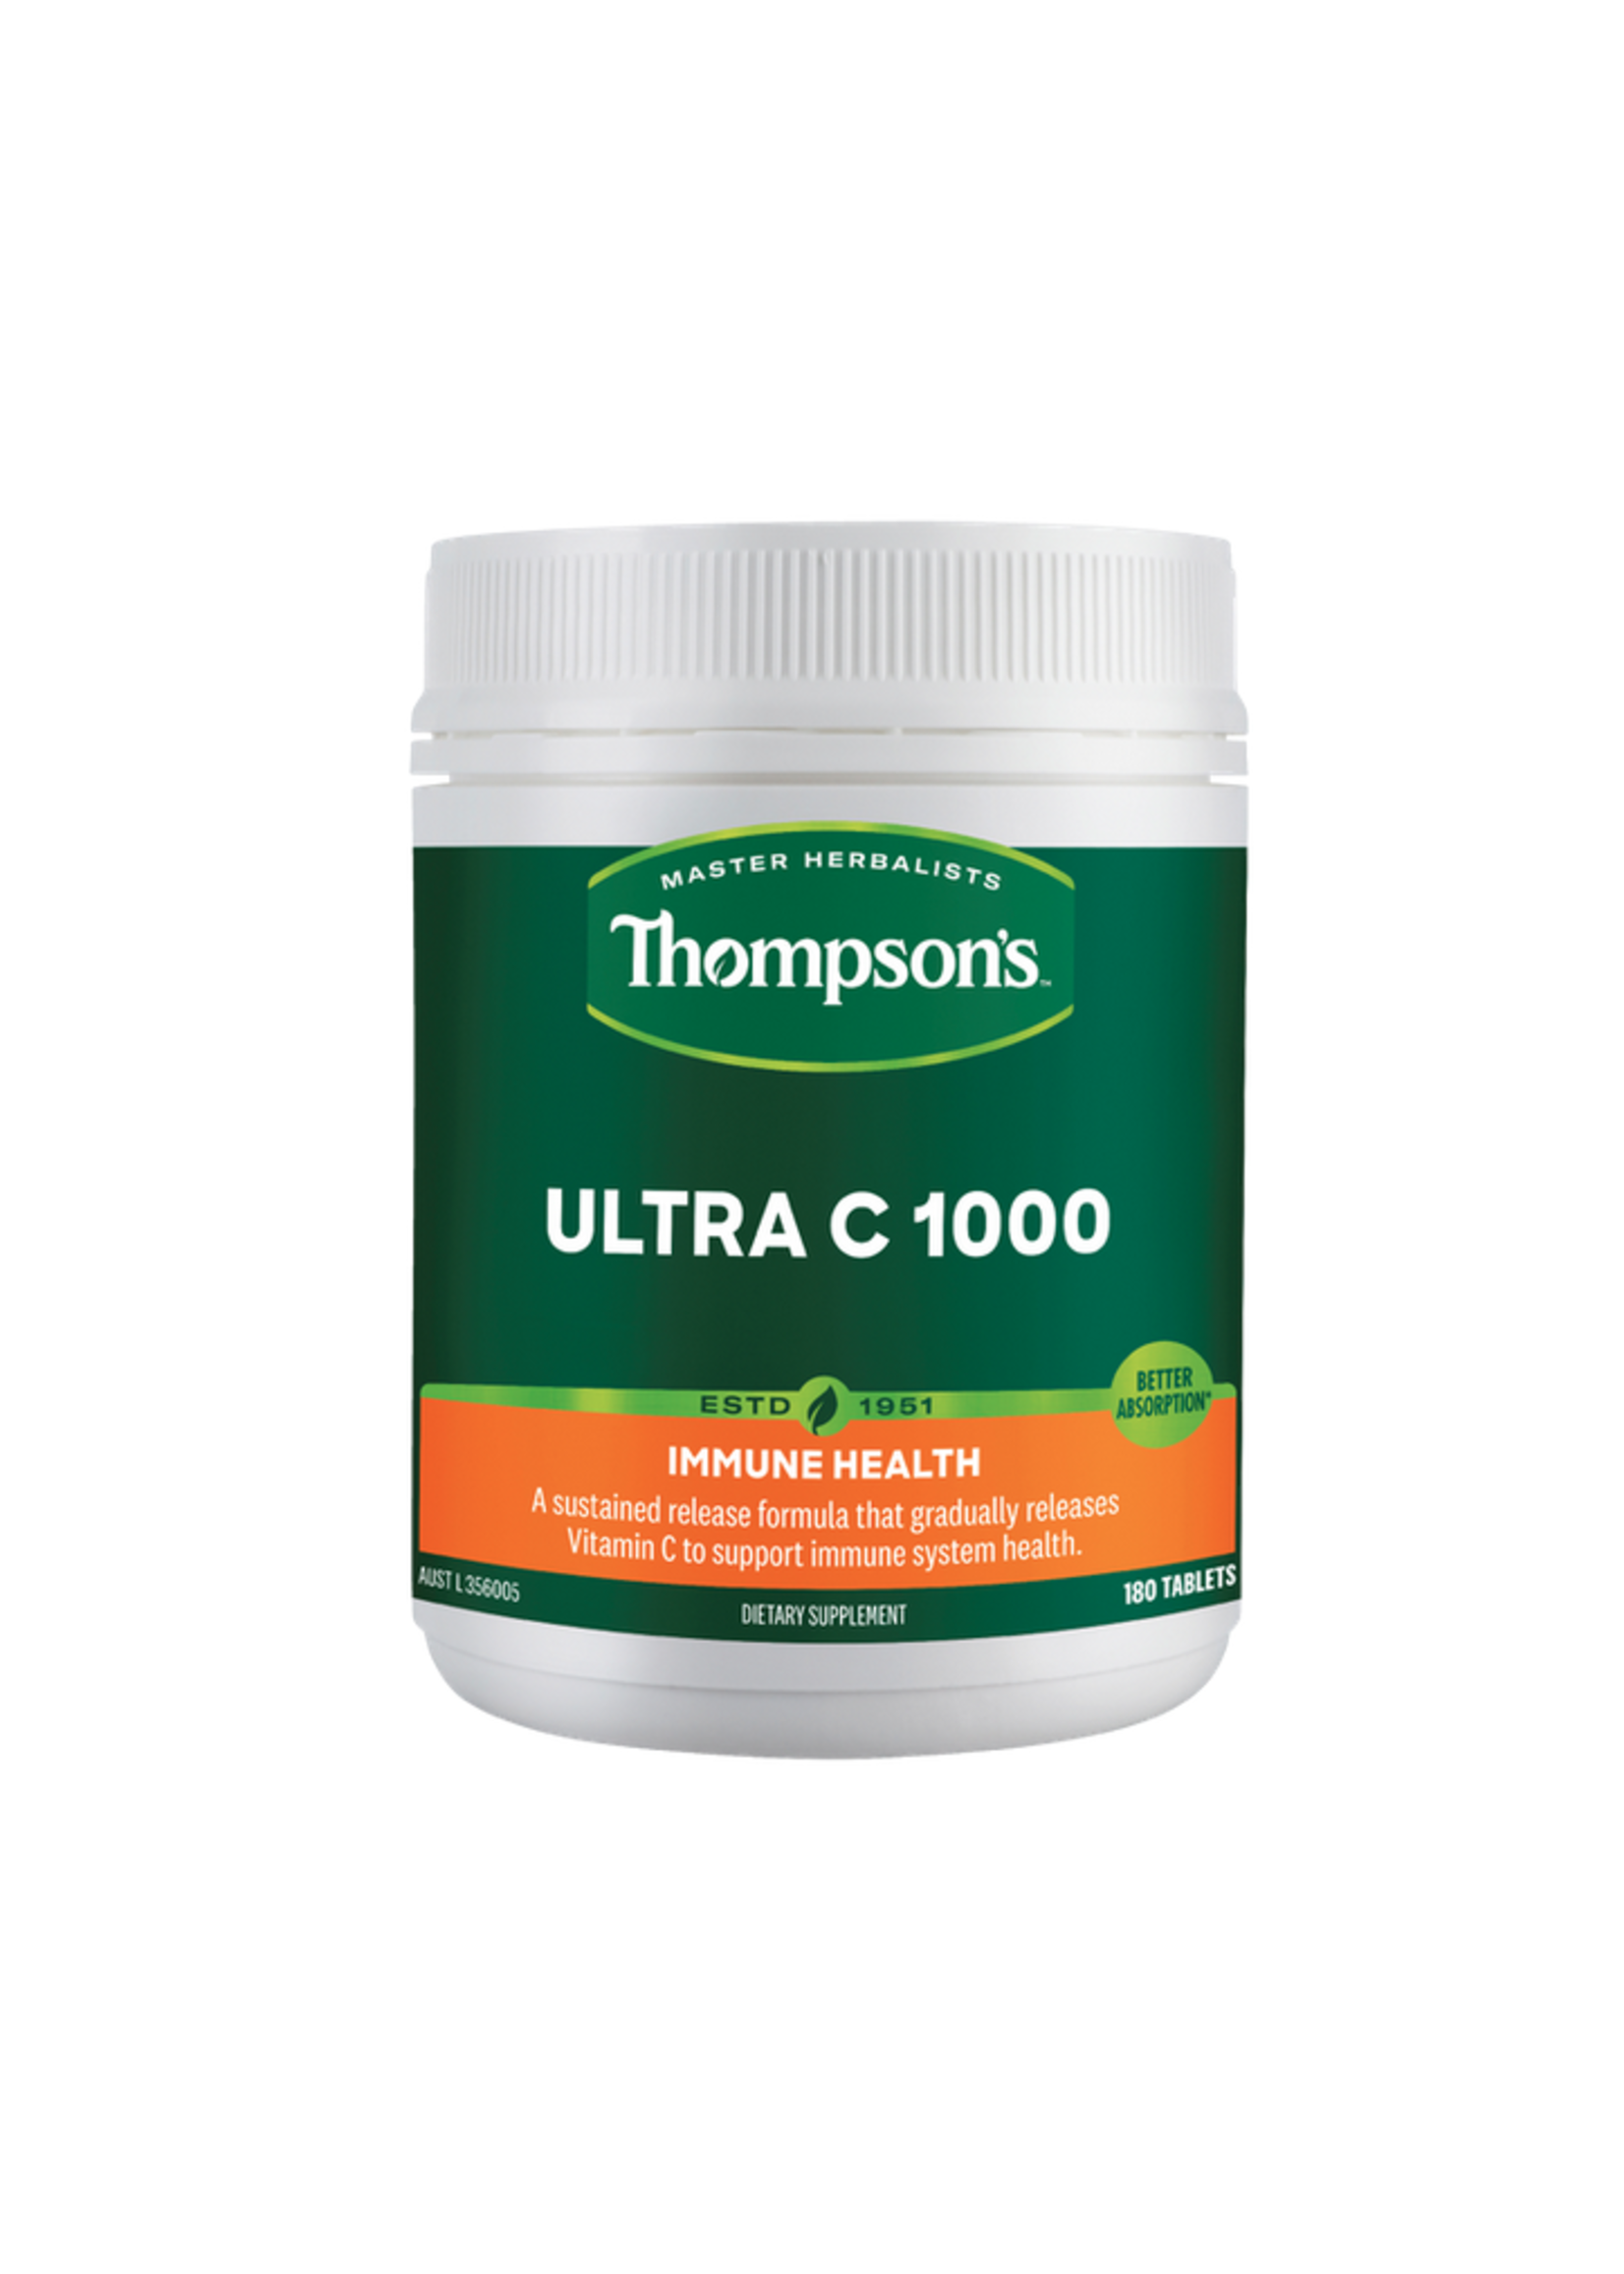 Thompson's Thompsons ultra C 1000 180 tablets